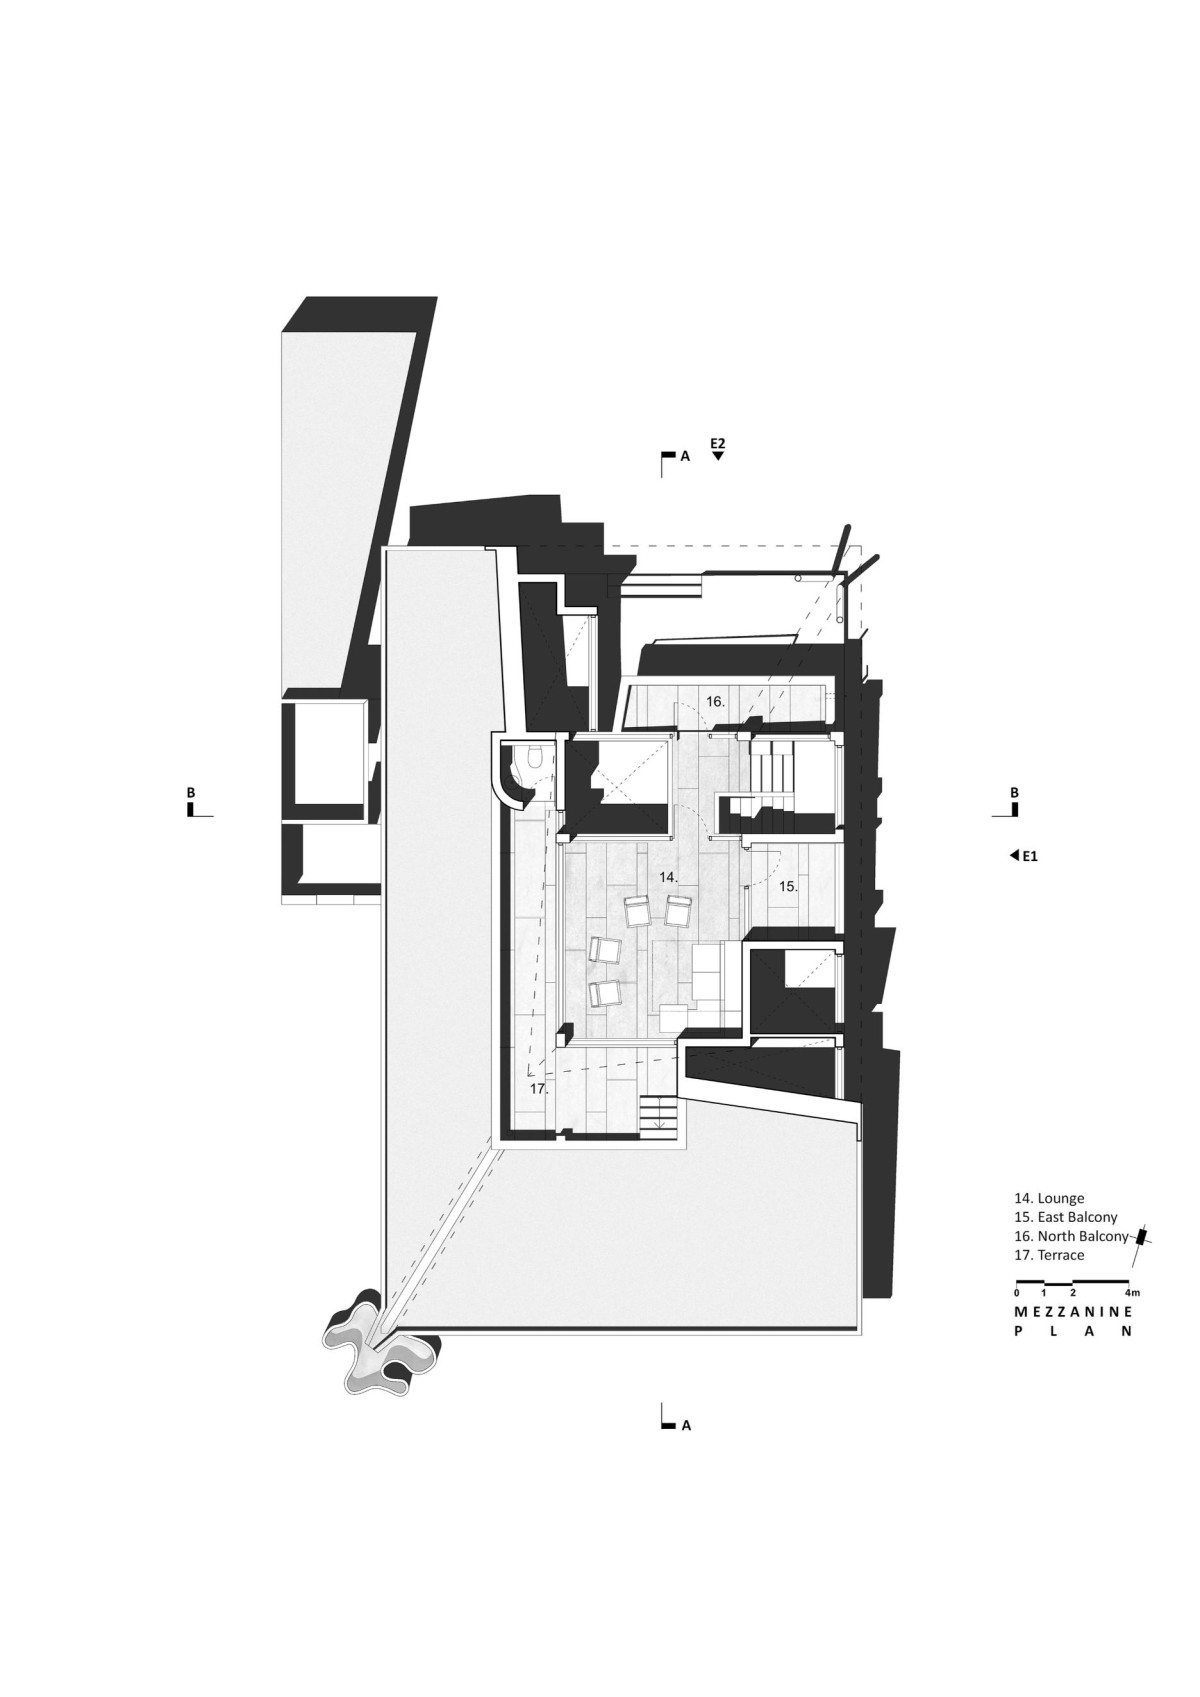 Mezanine floor plan of House at Gulmohar Greens by Studio 4000